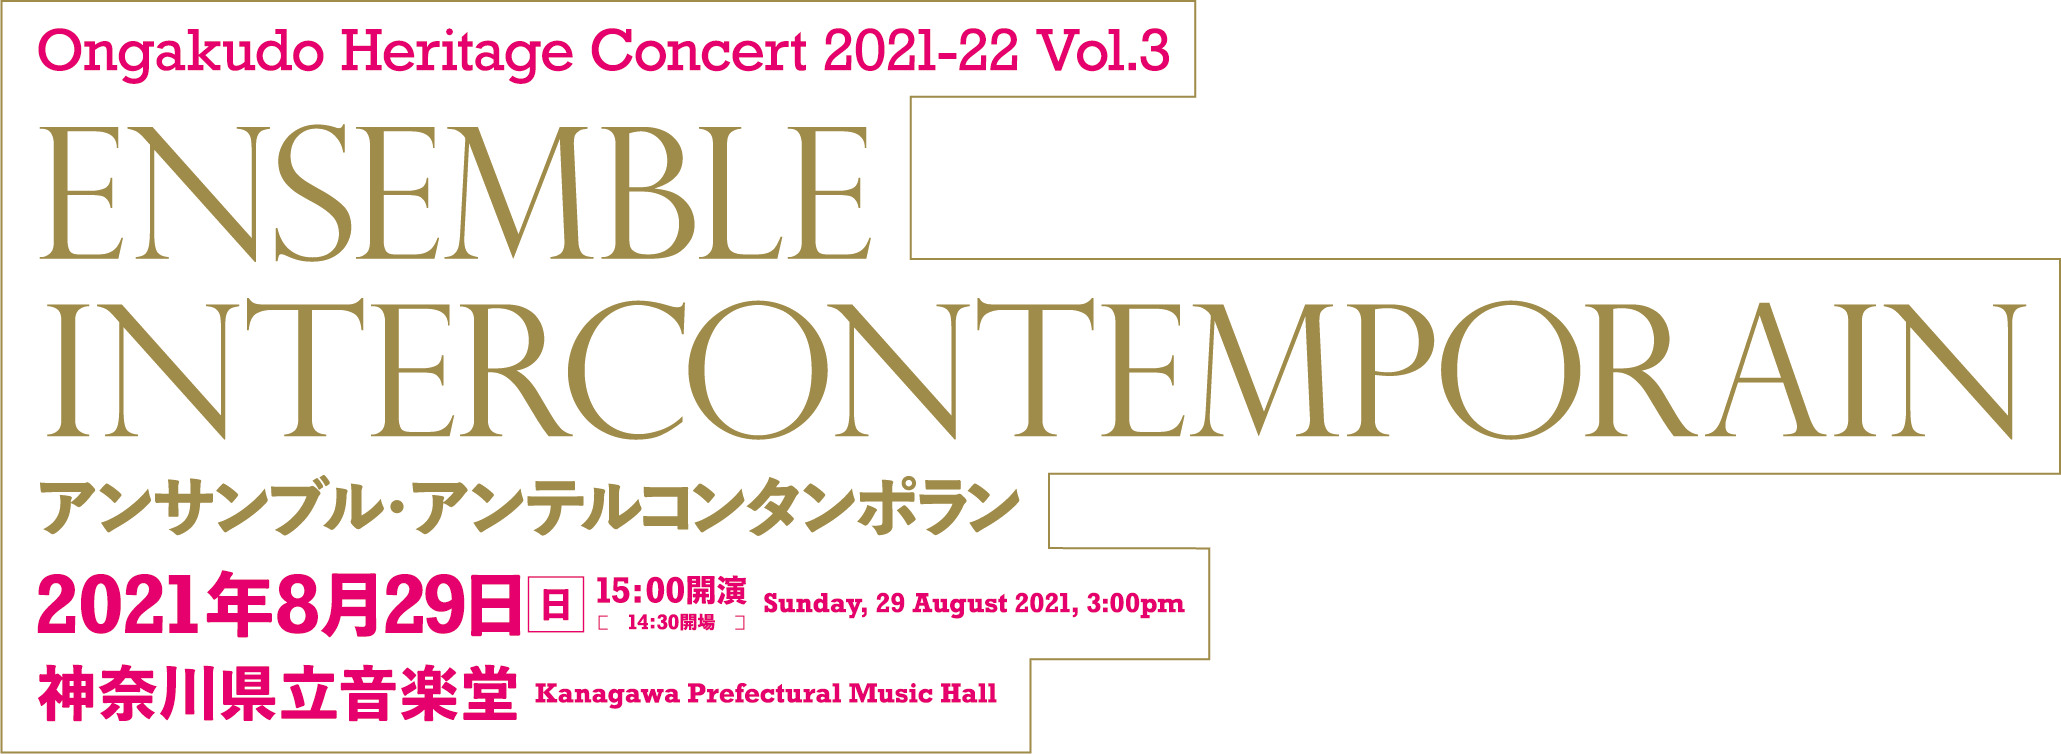 Ongakudo Heritage Concert 2021-22 Vol.3 Ensemble InterContemporain